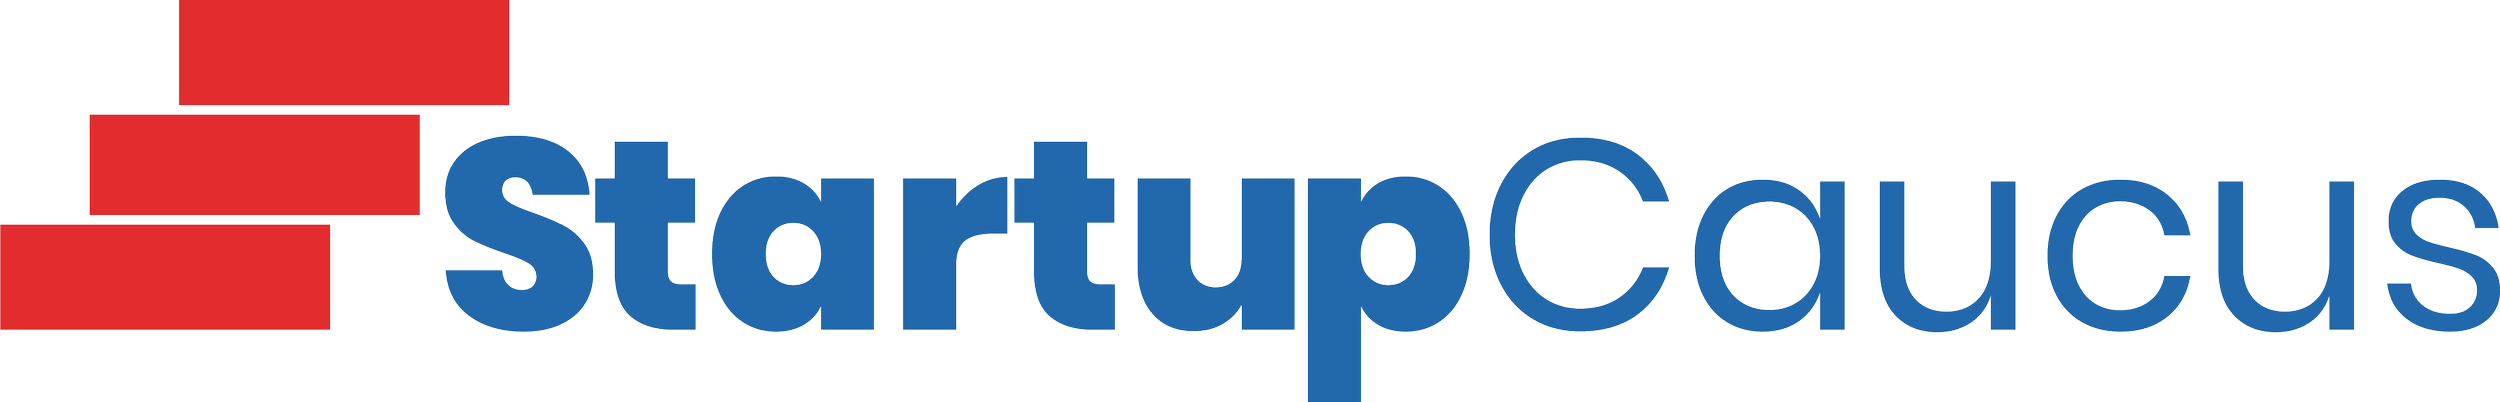 startup-caucus-logo-color.png